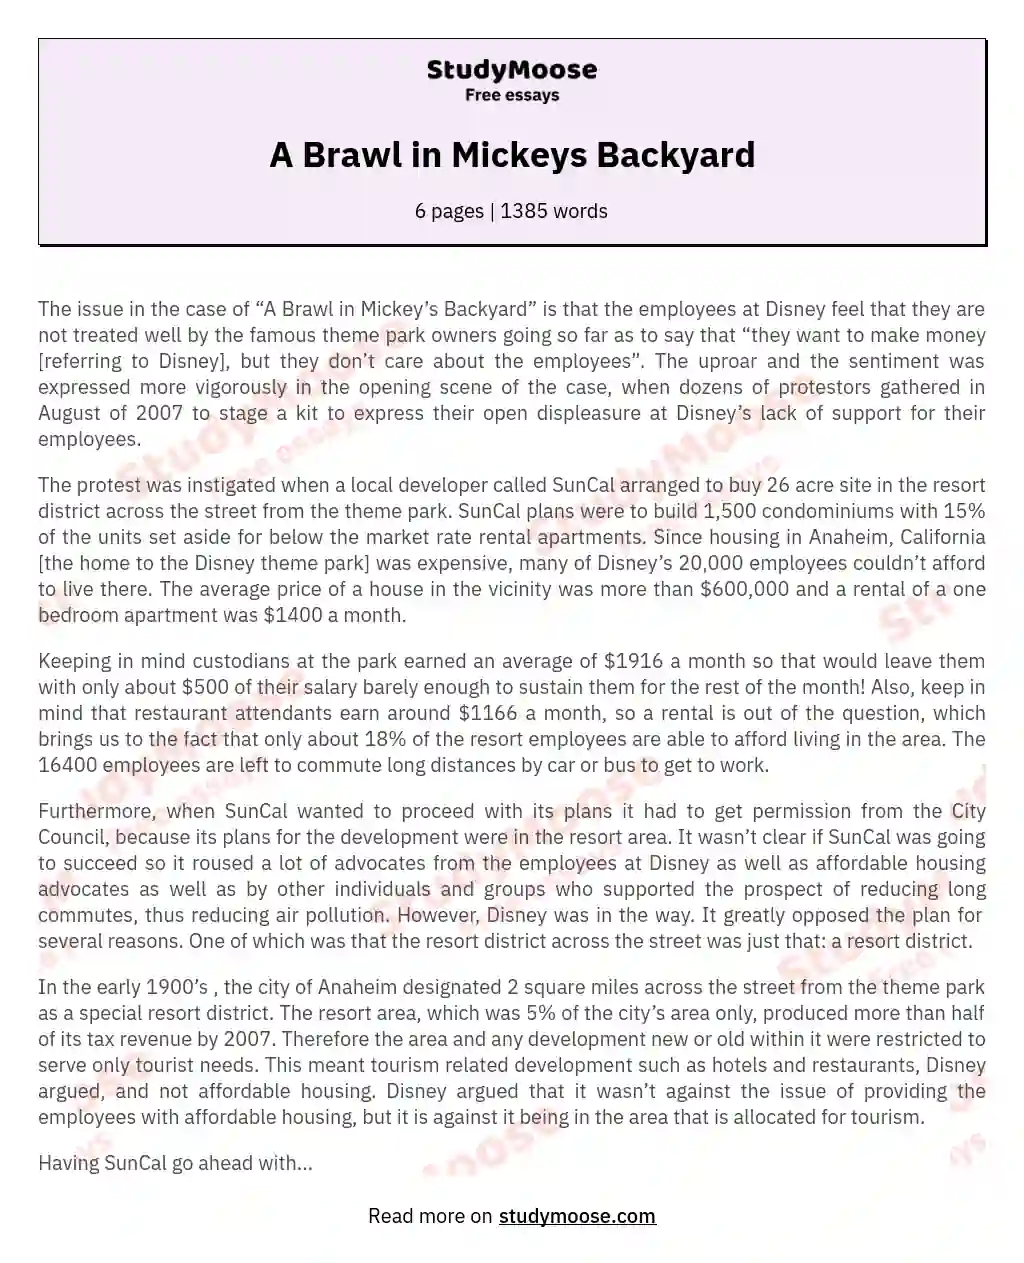 A Brawl in Mickeys Backyard essay